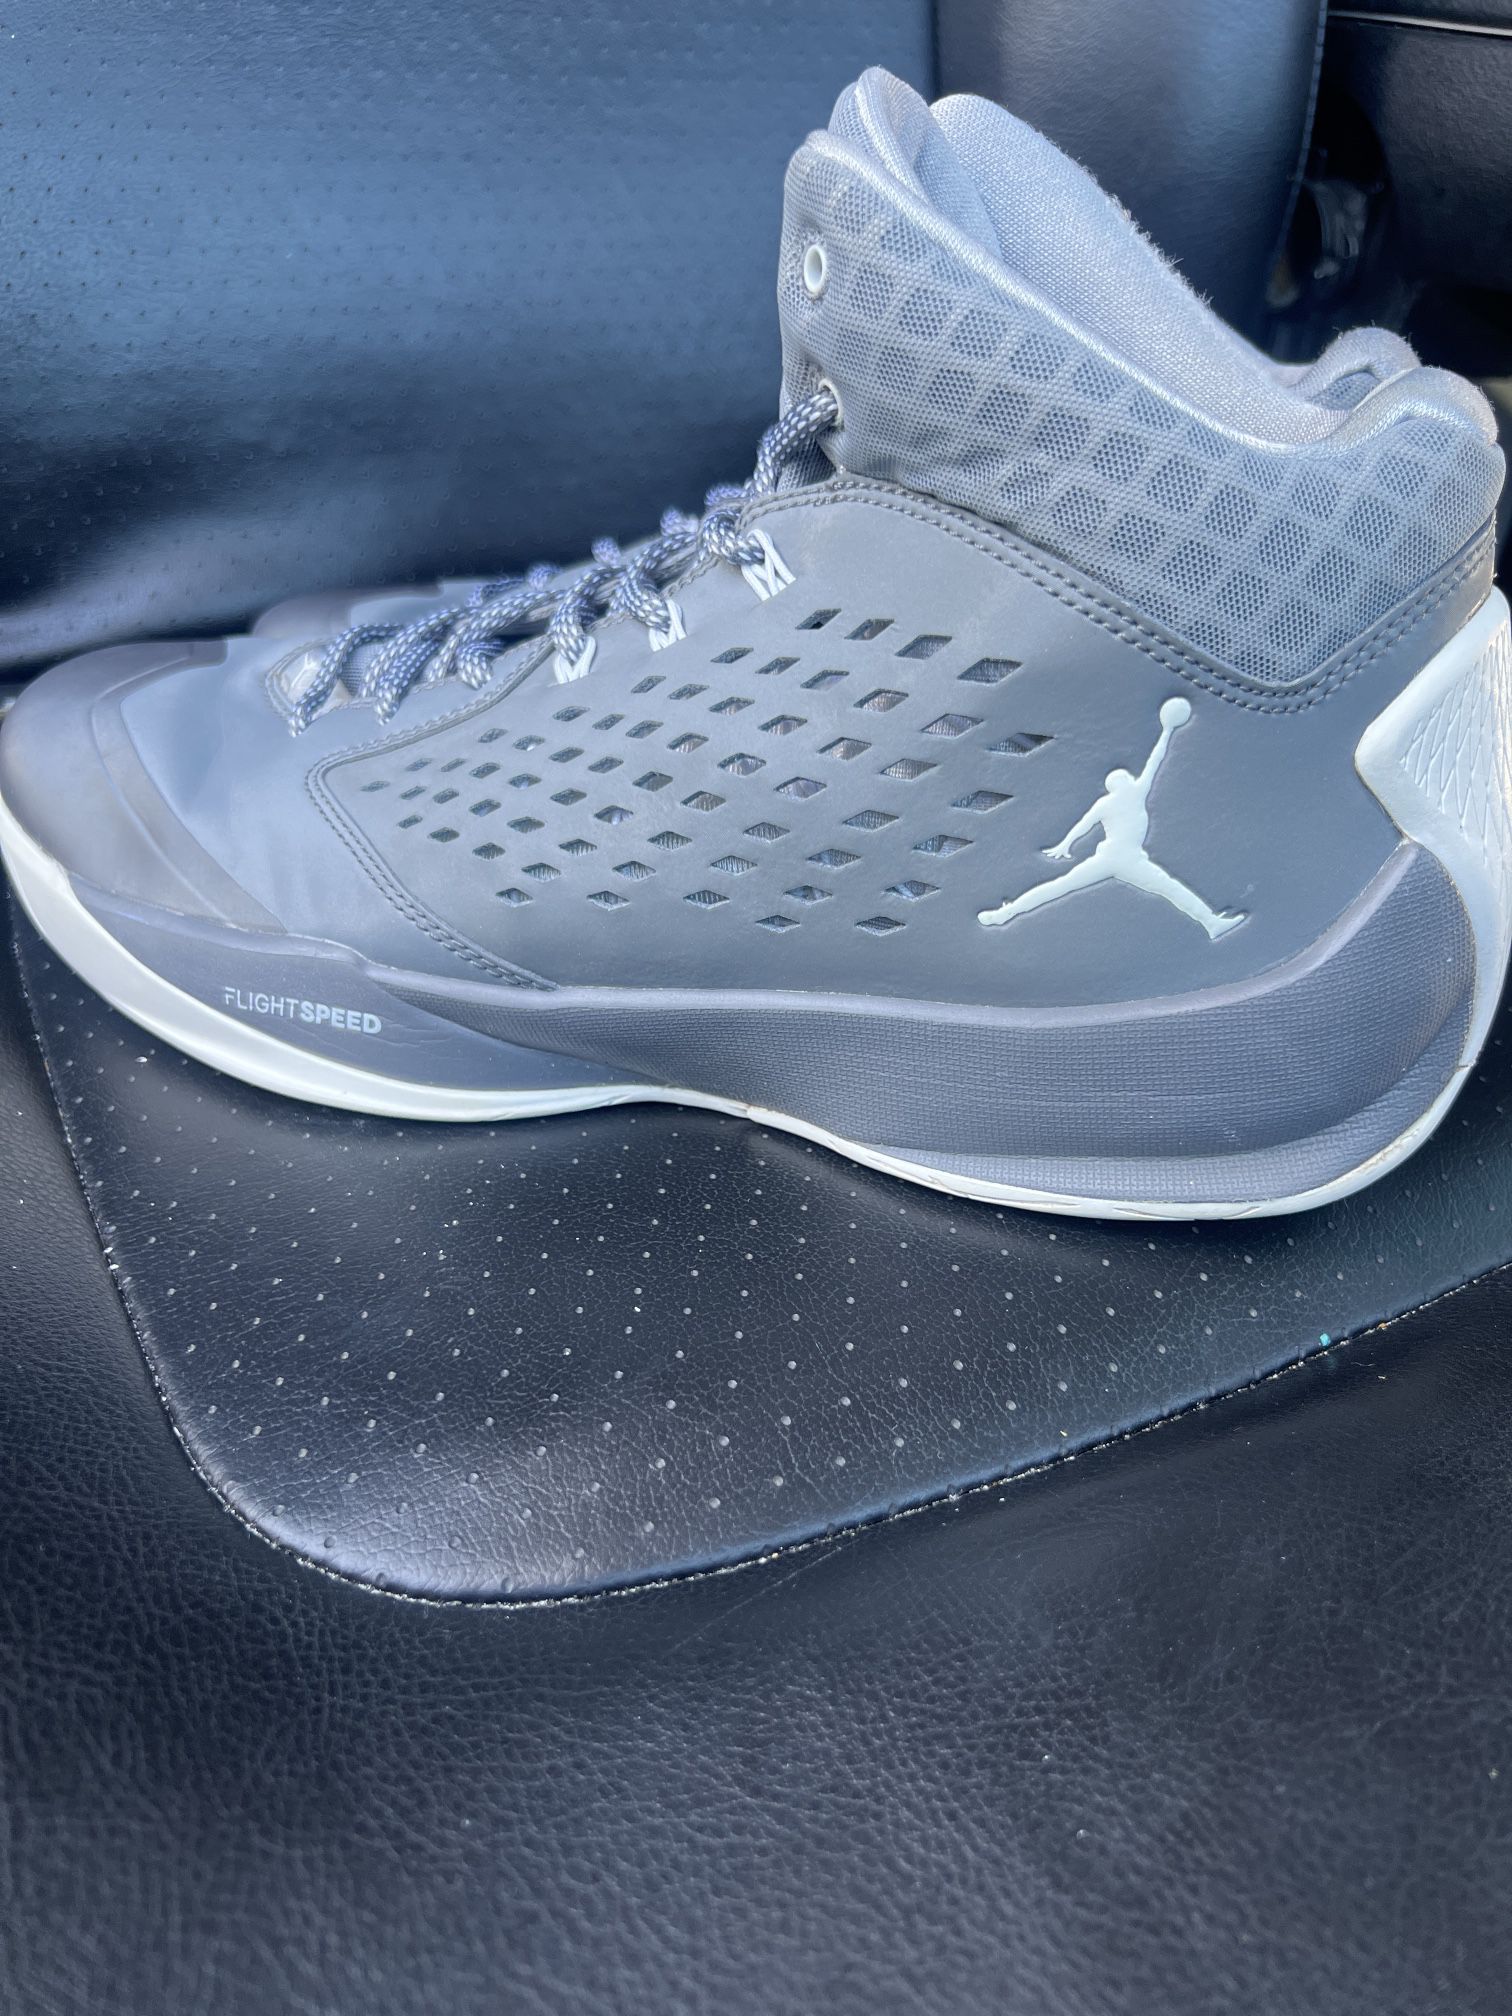 3 Pairs Of Jordan’s Nike Mens Shoes Size 10, 11, 12